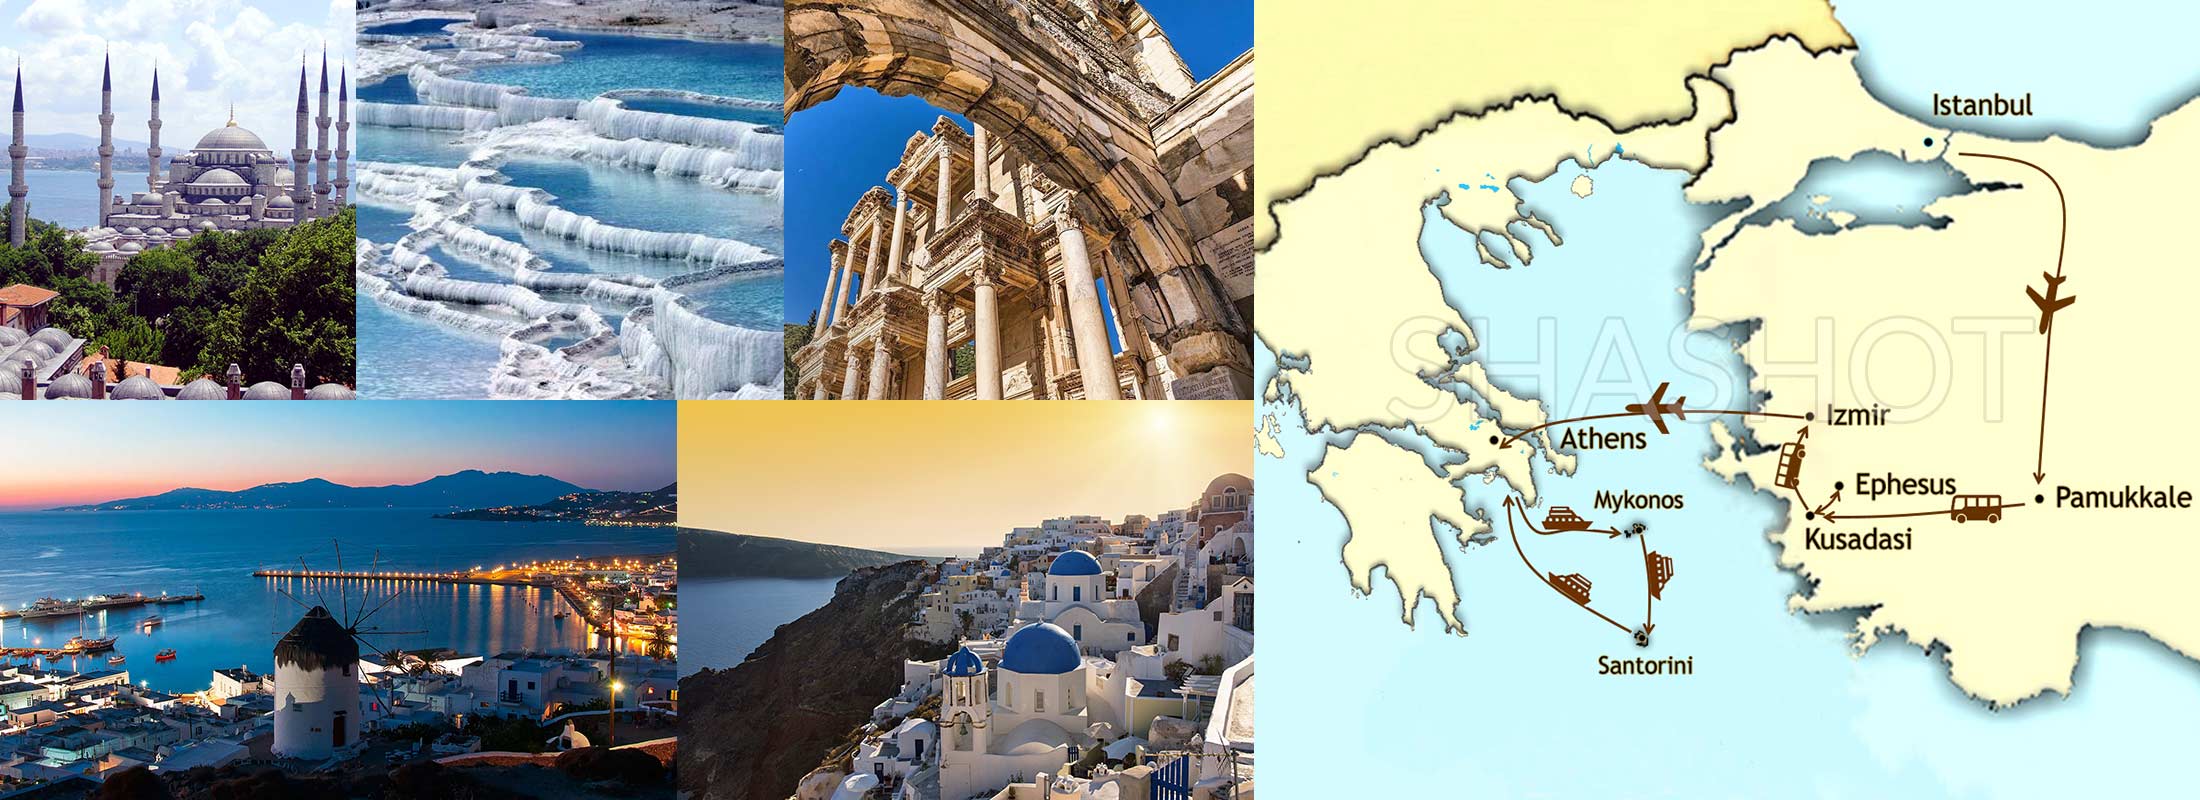 8-DAYS-TURKEY-GREECE-PACKAGE-TOUR-ISTANBUL-PHESUS-PAMUKKALE-ATHENS-SANTORINI-MYKONOS-map